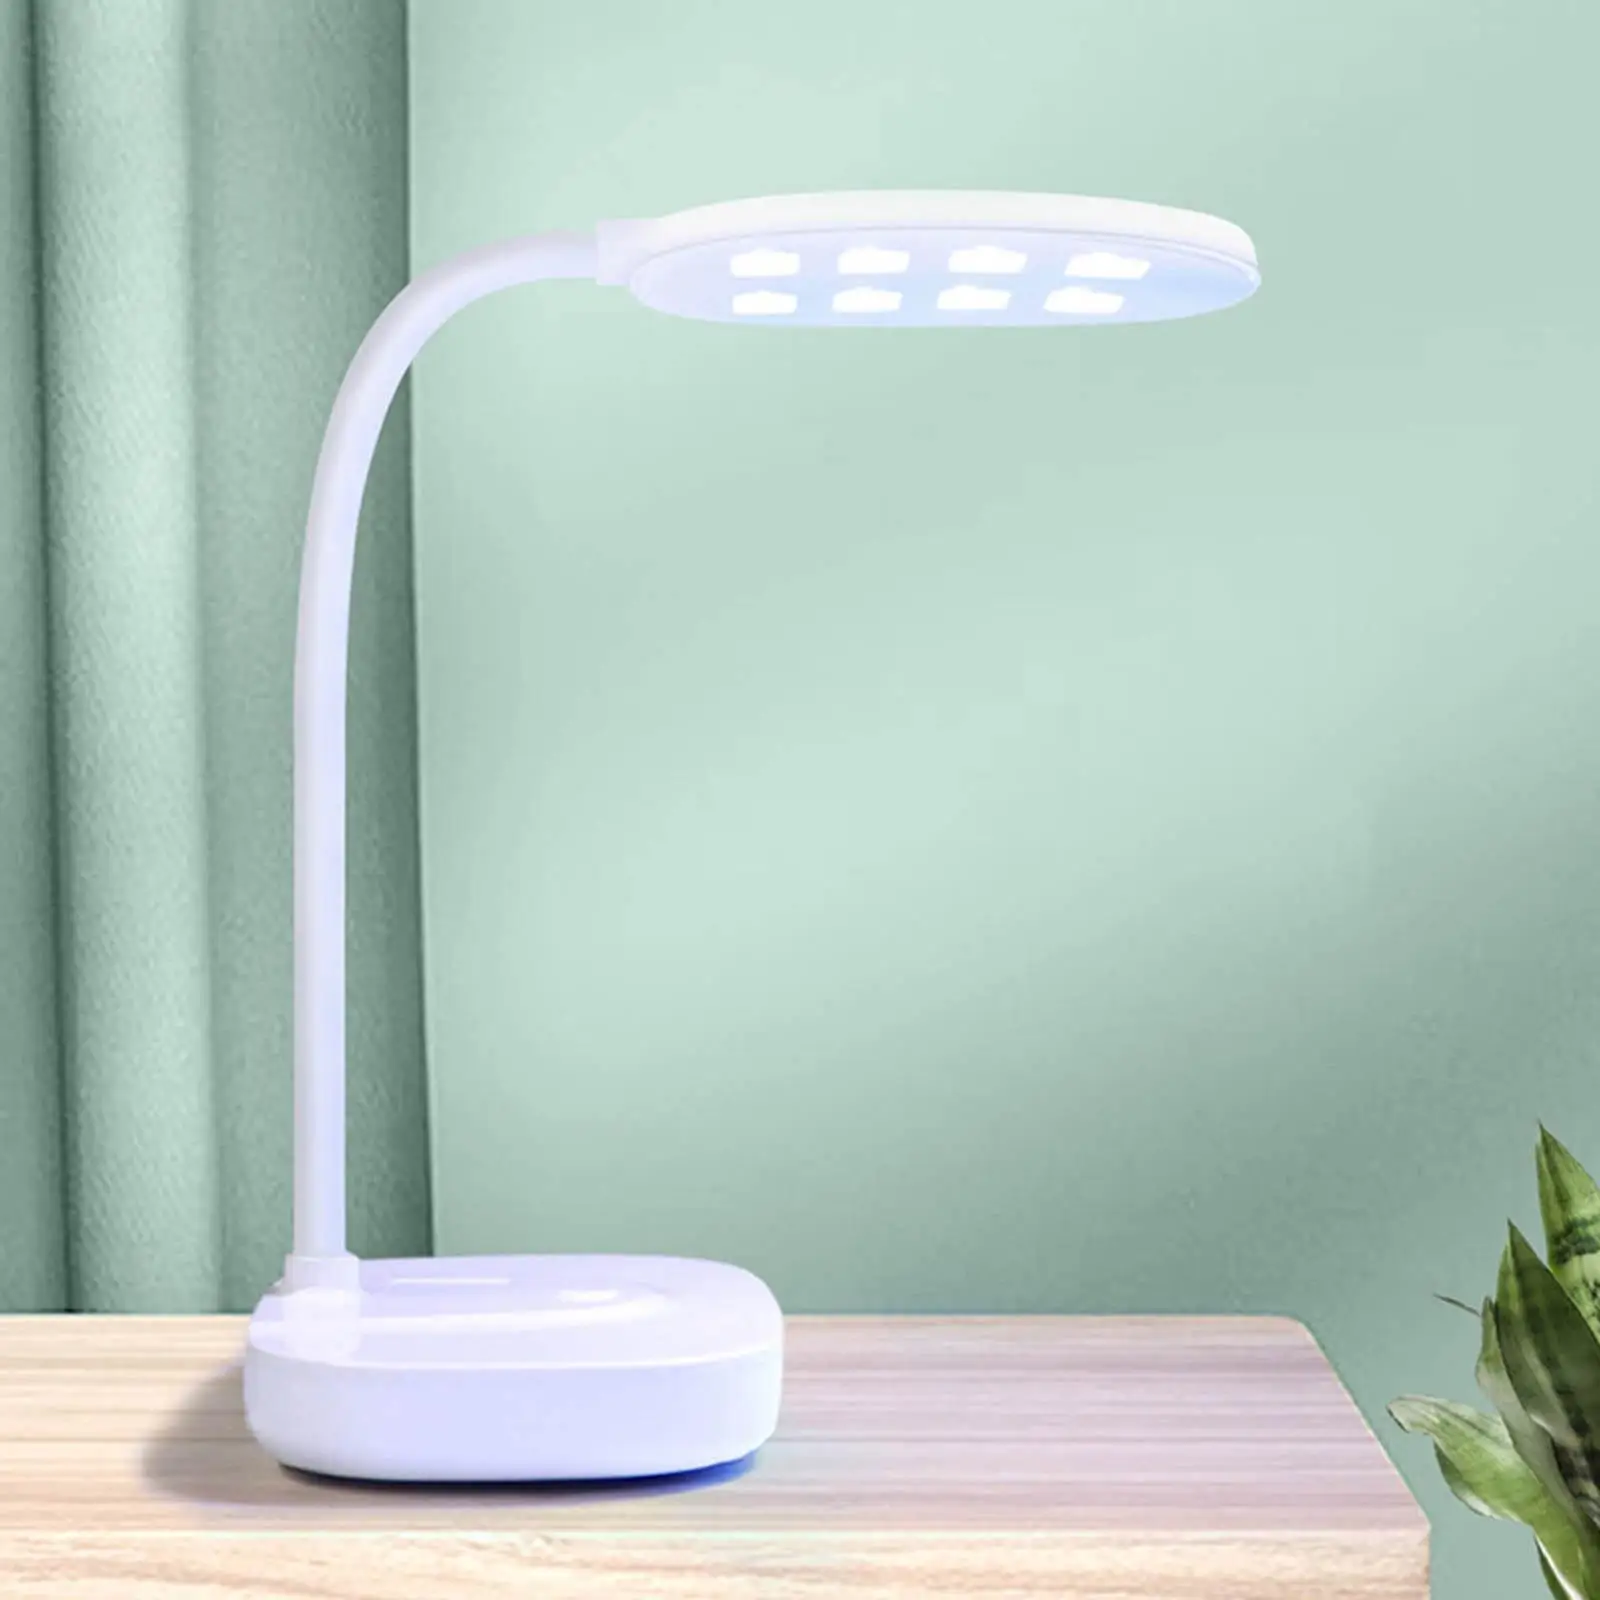 LED Nail Lamp 12W Heating Light Nail Polish Dryer for Gel Nails Girls Women